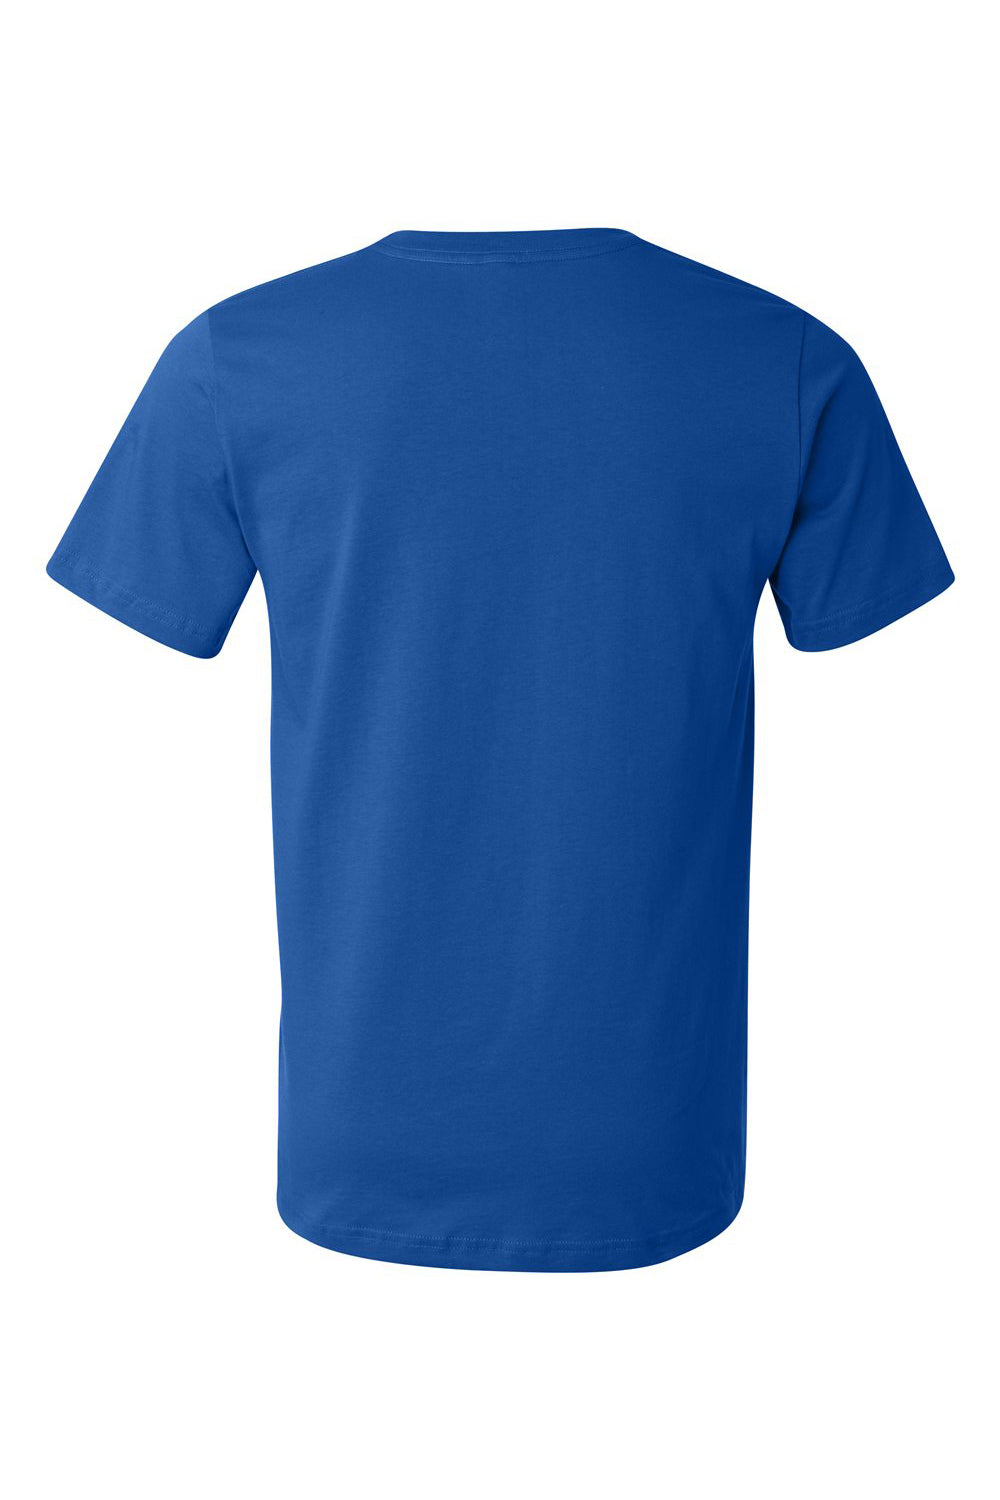 Bella + Canvas 3001U/3001USA Mens USA Made Jersey Short Sleeve Crewneck T-Shirt Royal Blue Flat Back